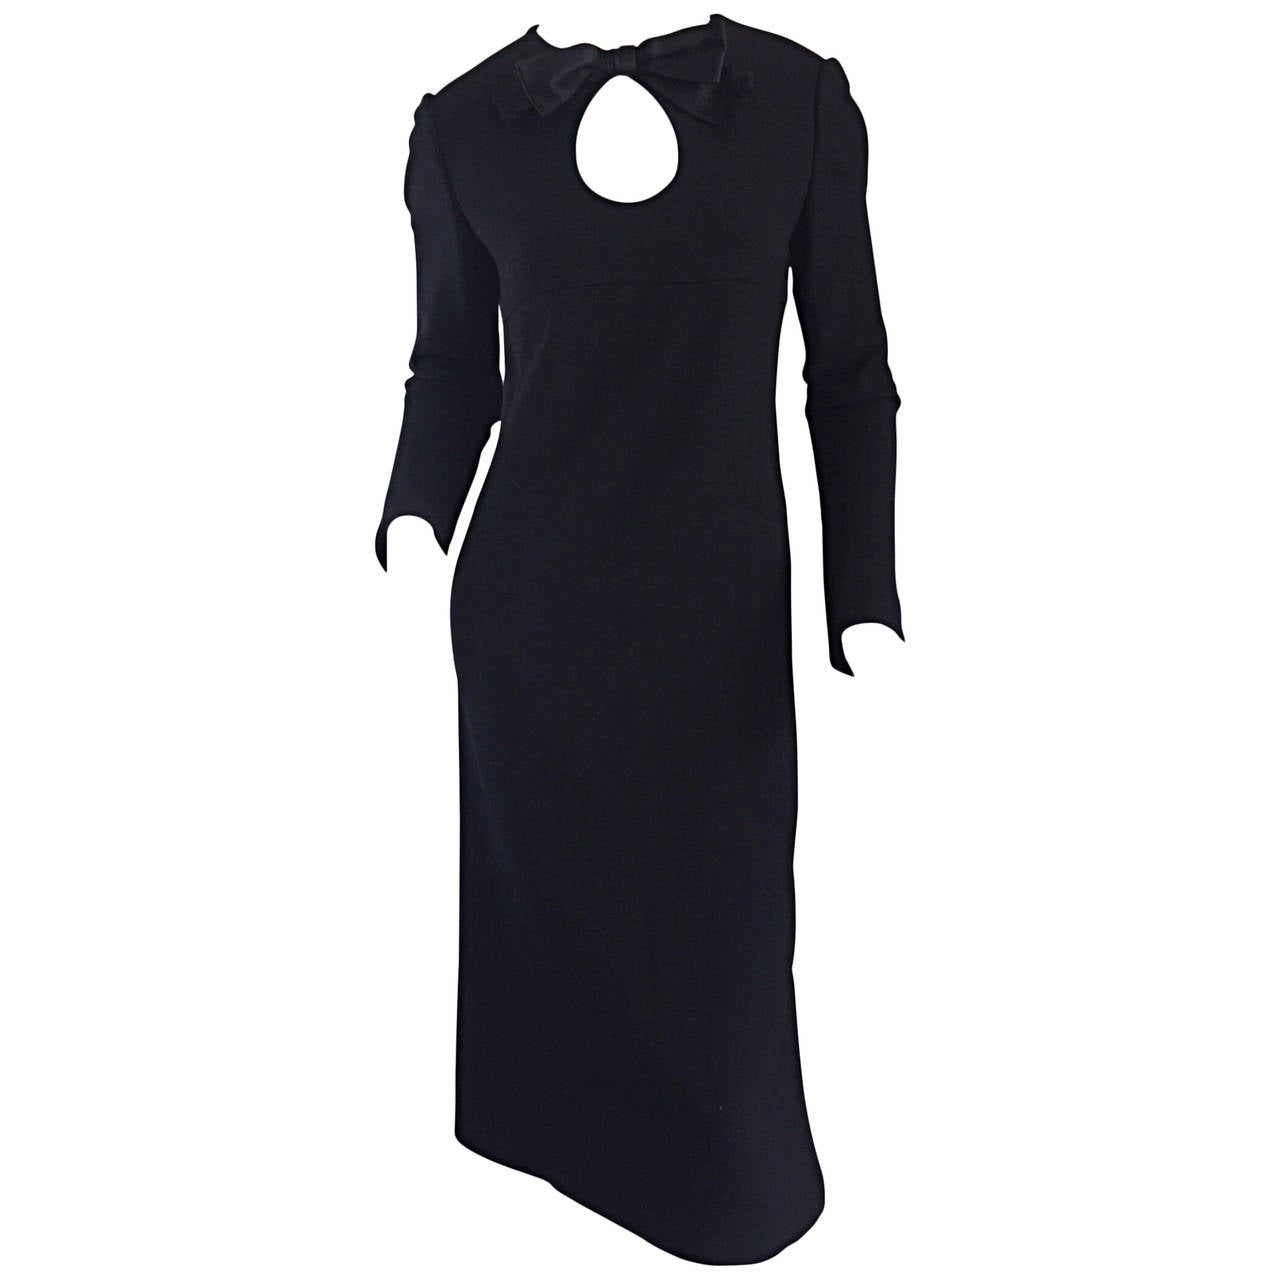 Iconic Vintage Pierre Cardin 1960s 60s Black Wool Cut - Out Dress w/ Bow